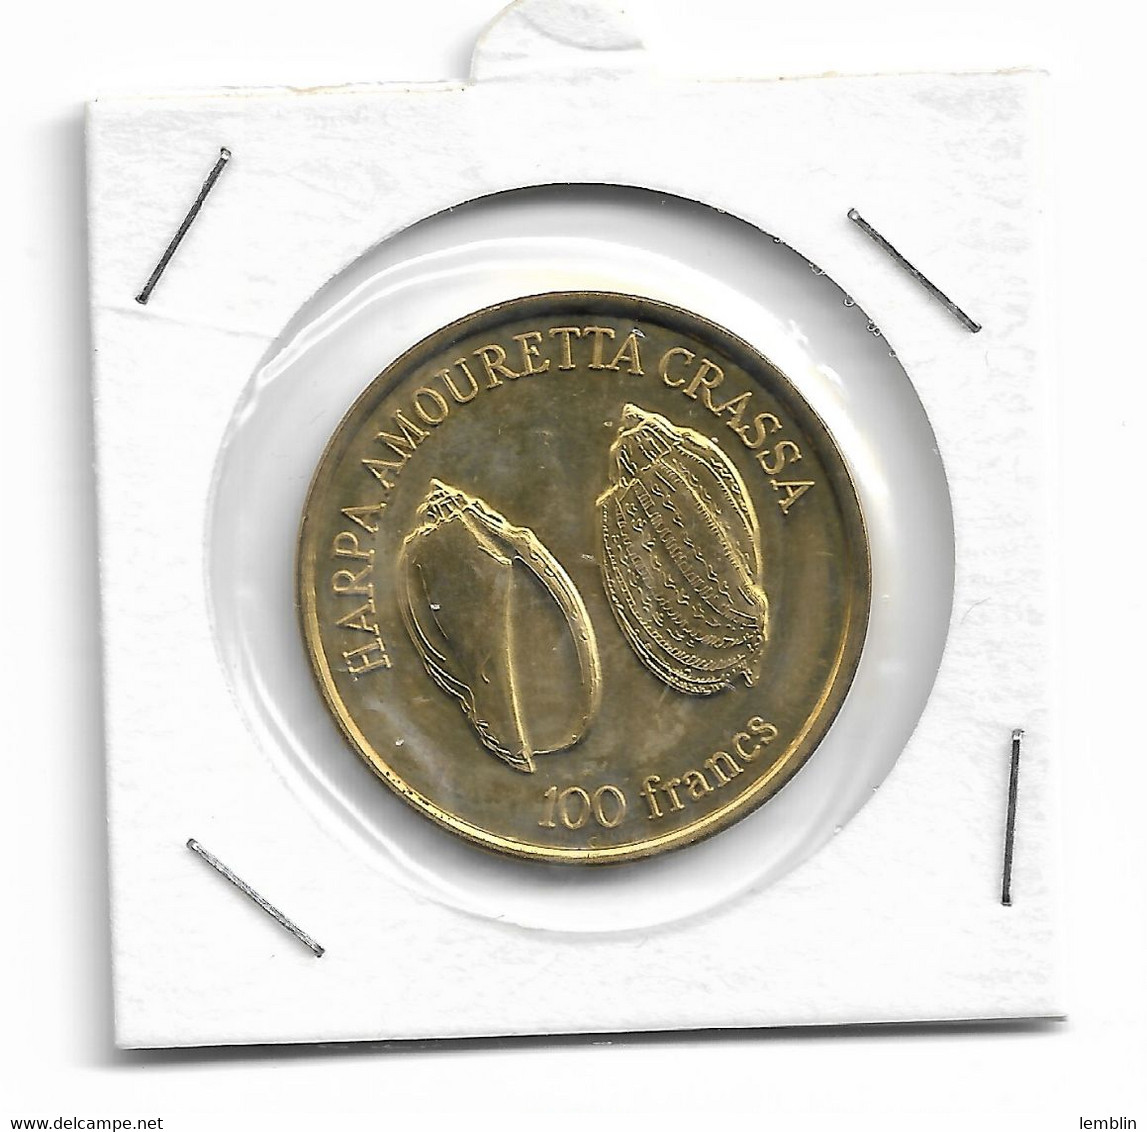 bimetal WALLIS & FUTUNA 500 Francs 2011 Shell unusual coinage 